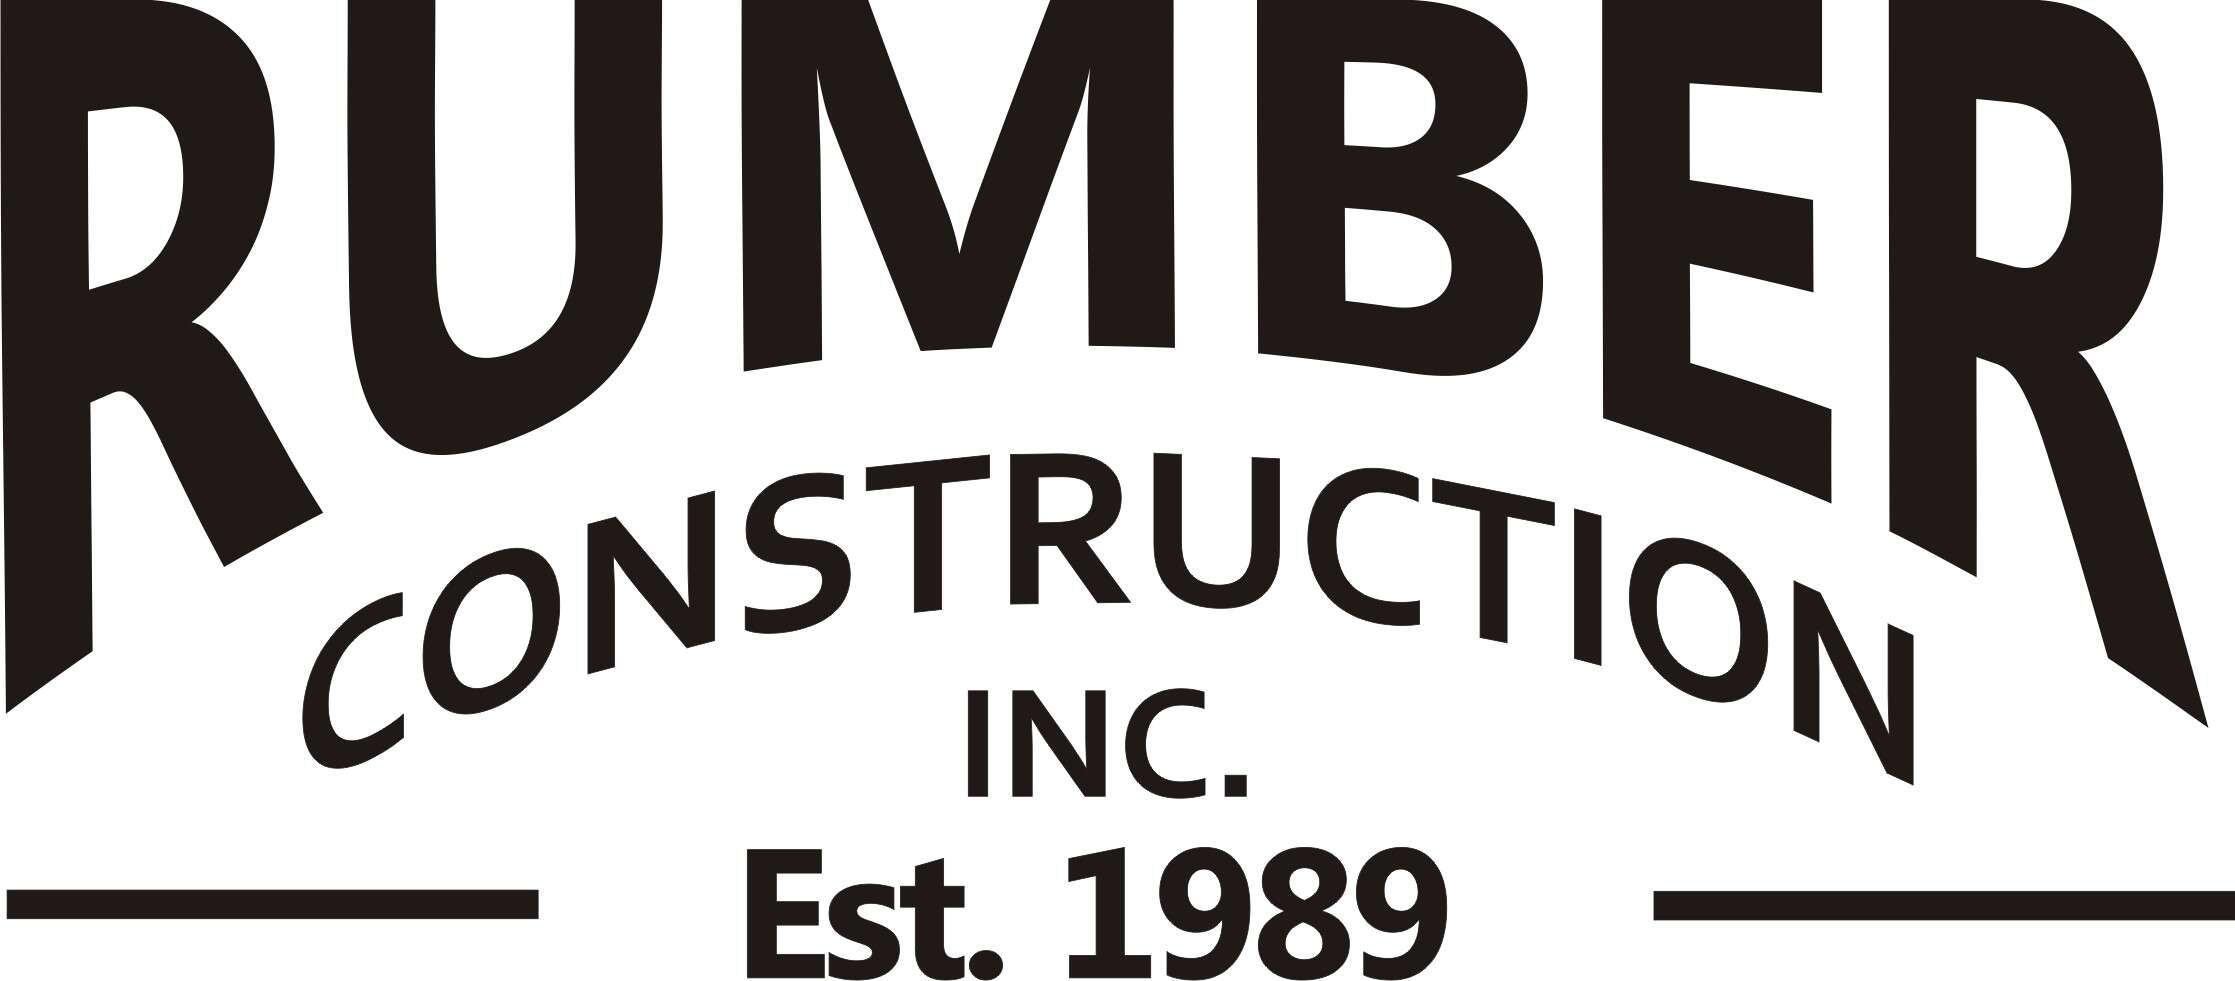 Rumber Construction